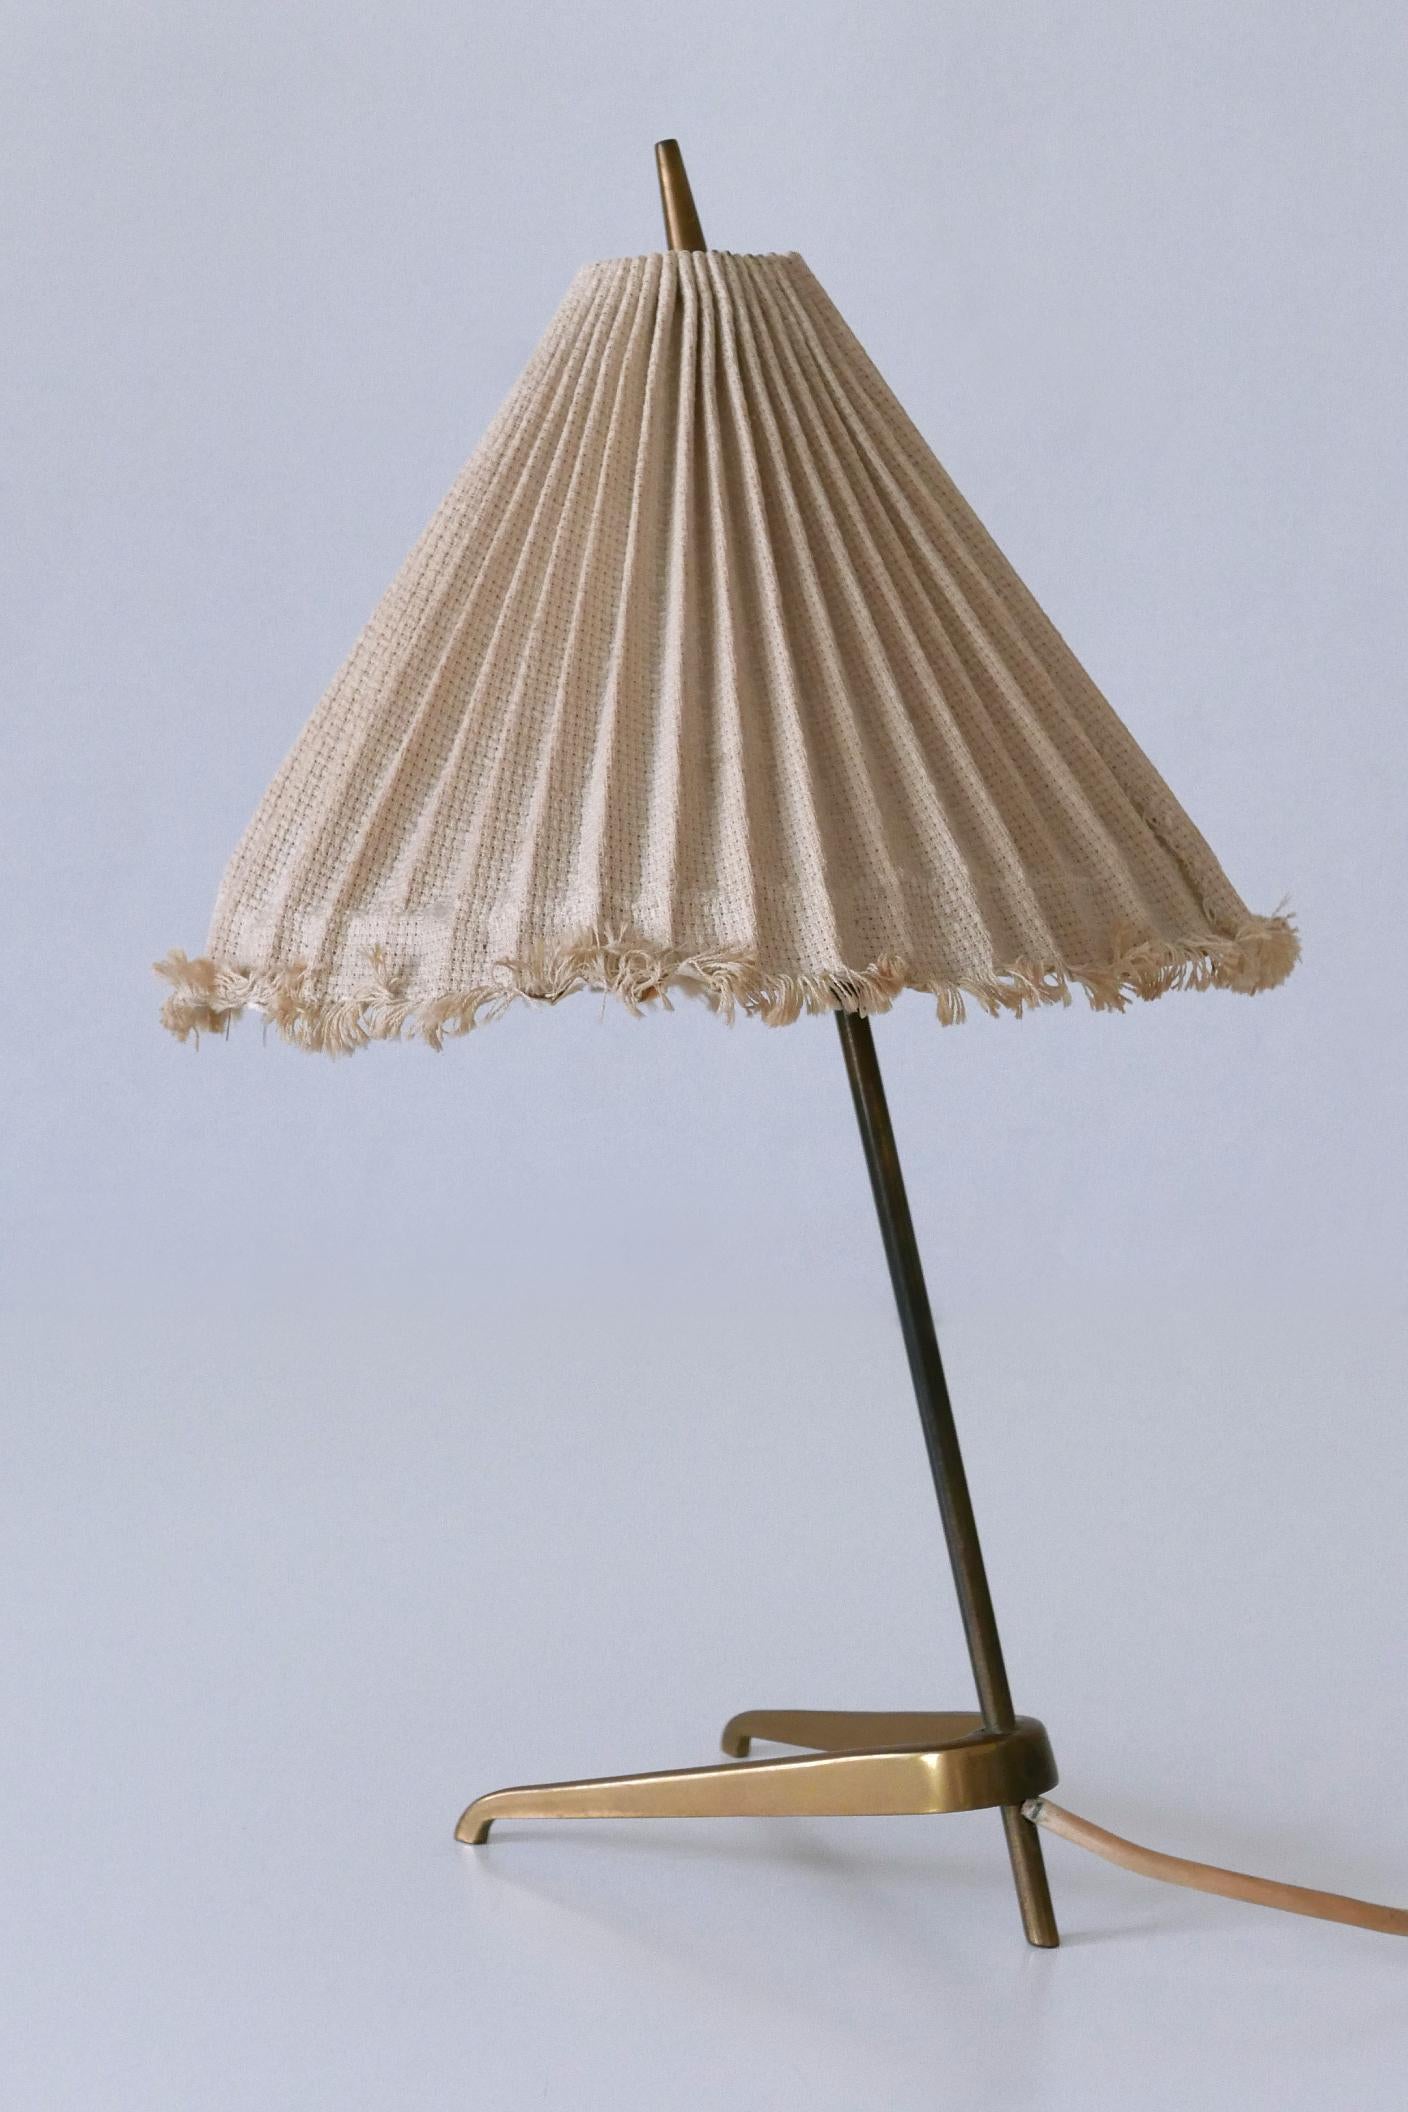 Rare Mid-Century Modern Brass Crowfoot Table Lamp by J.T. Kalmar Austria 1950s For Sale 1